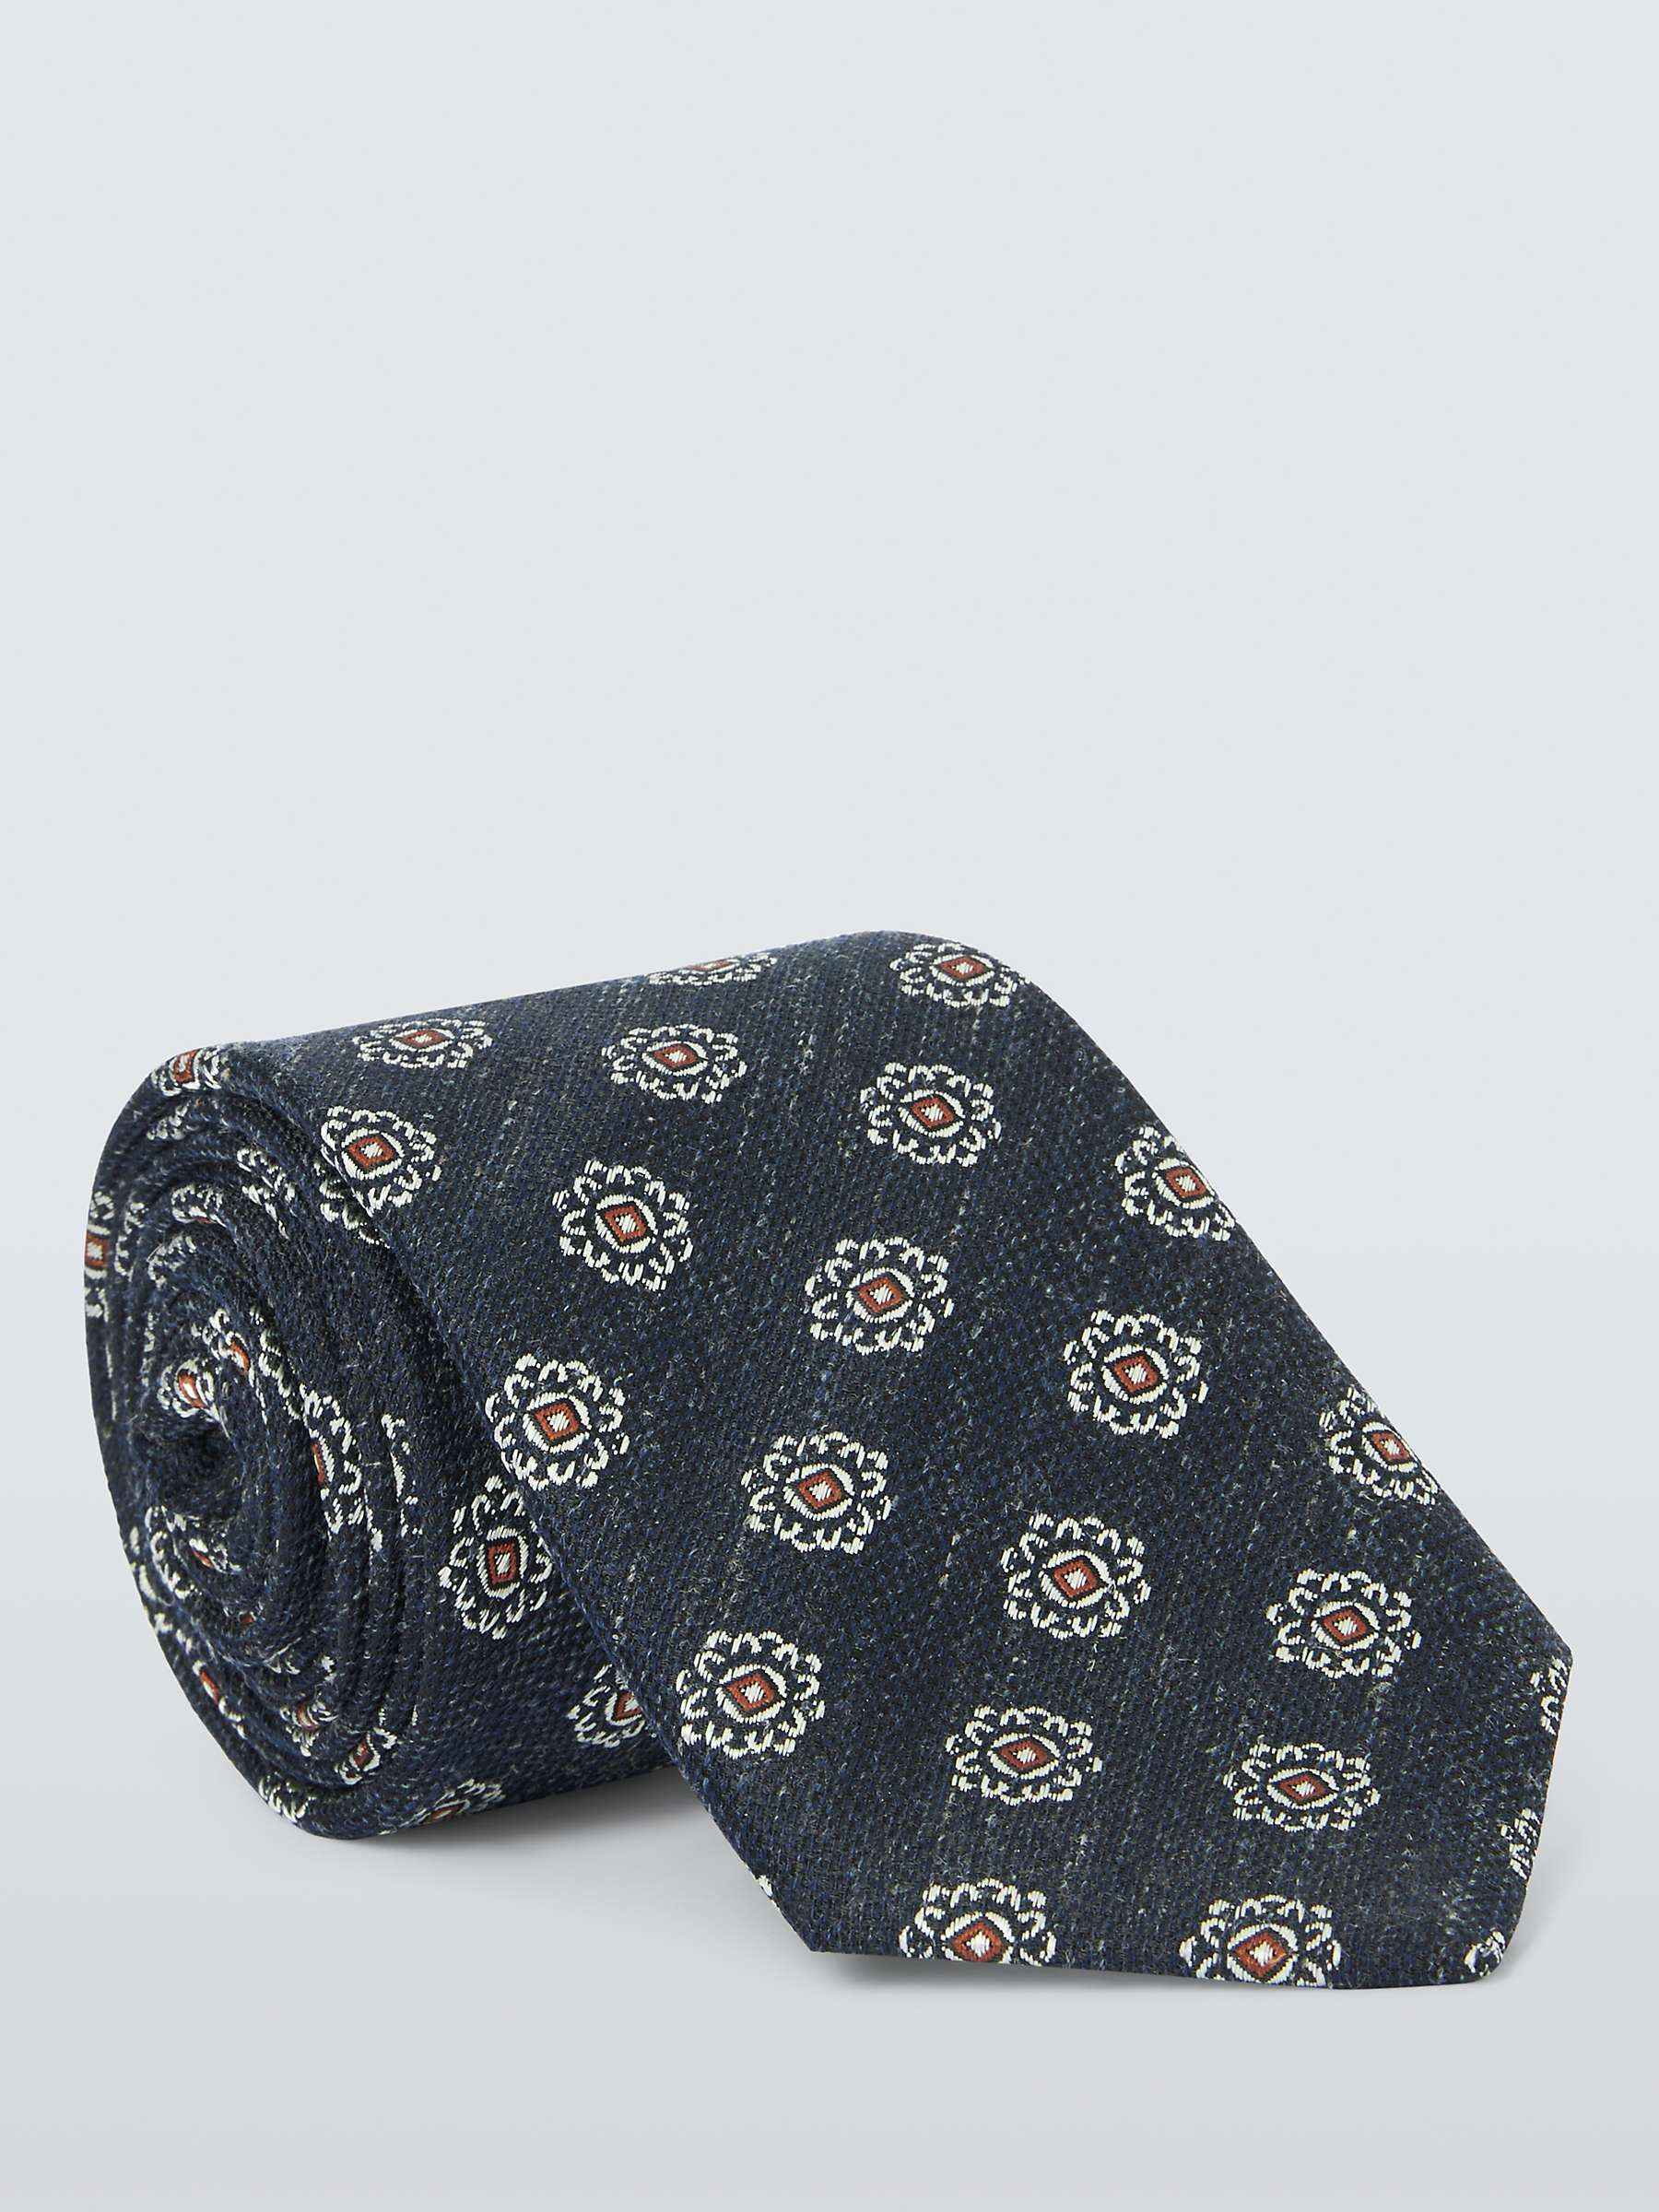 Buy John Lewis Woven Foulard Floral Tie, Navy Online at johnlewis.com